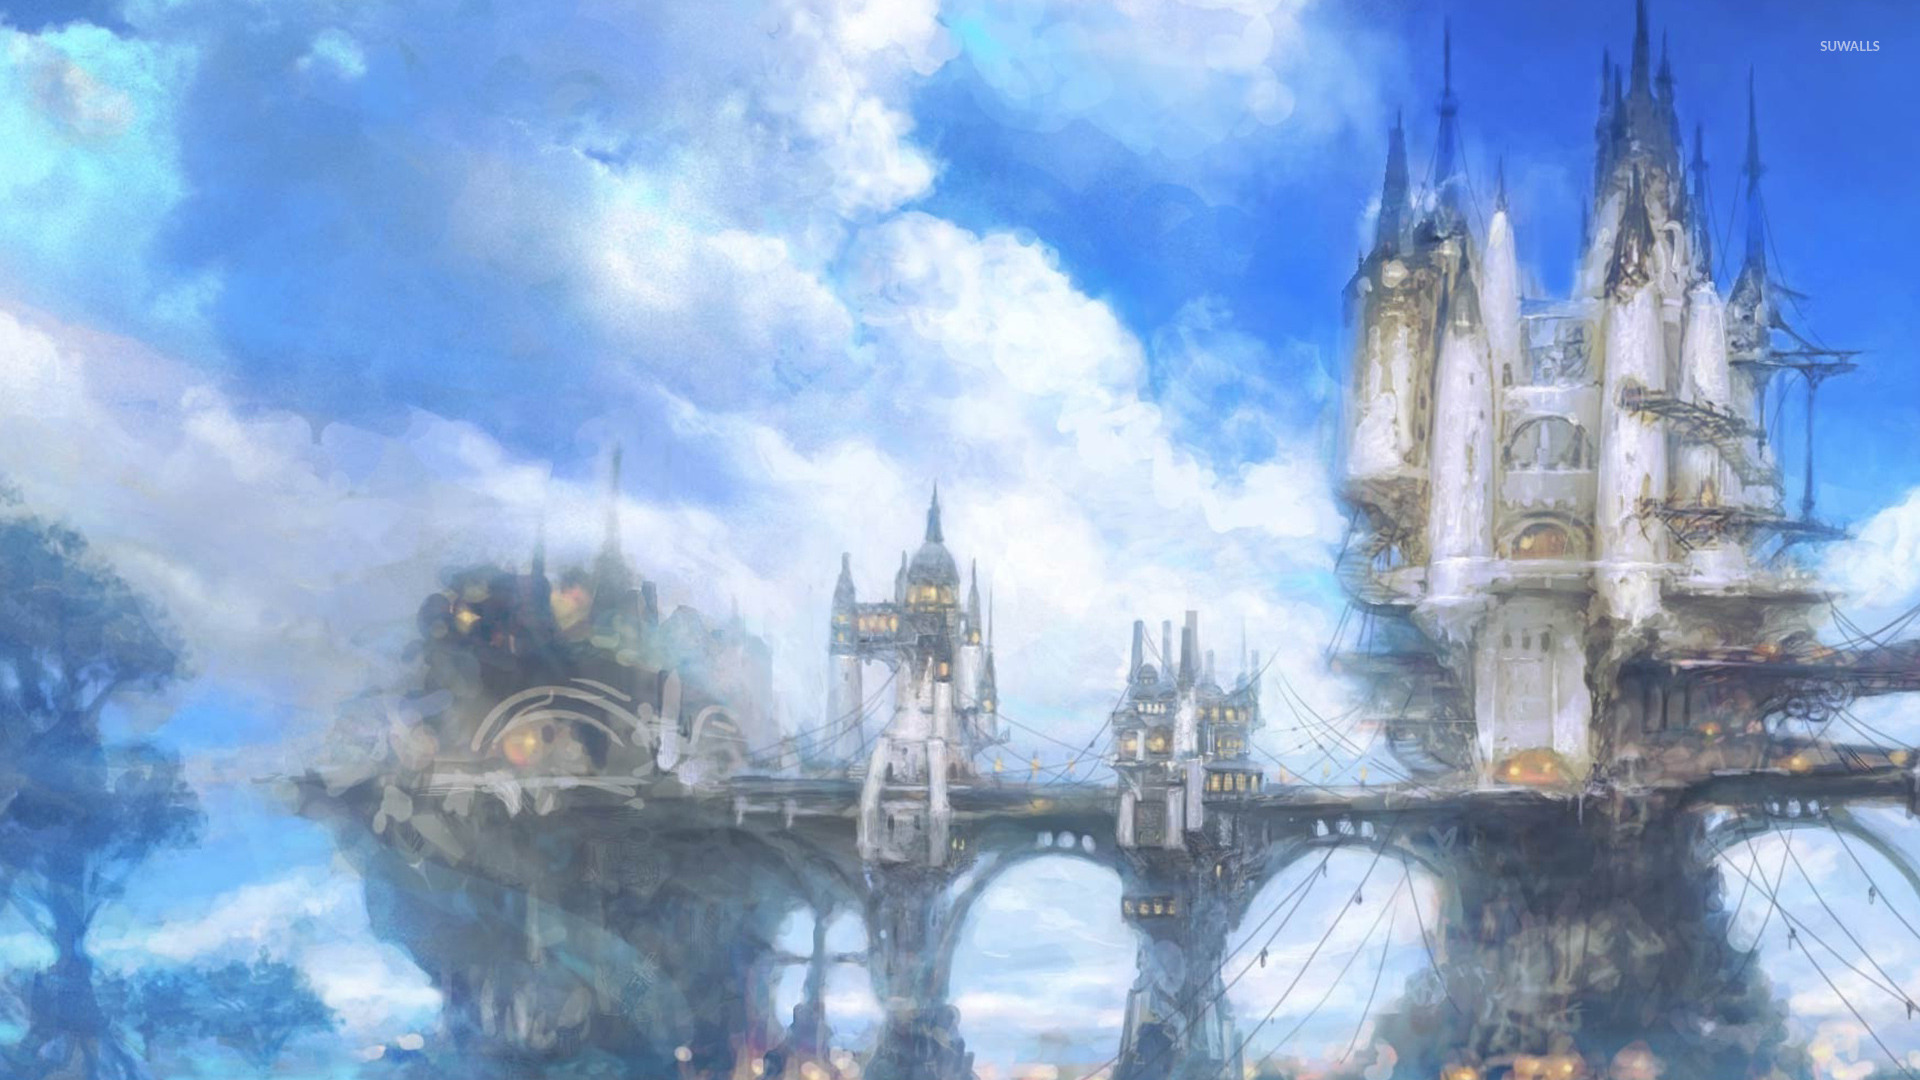 50 Final Fantasy Xiv Wallpaper On Wallpapersafari